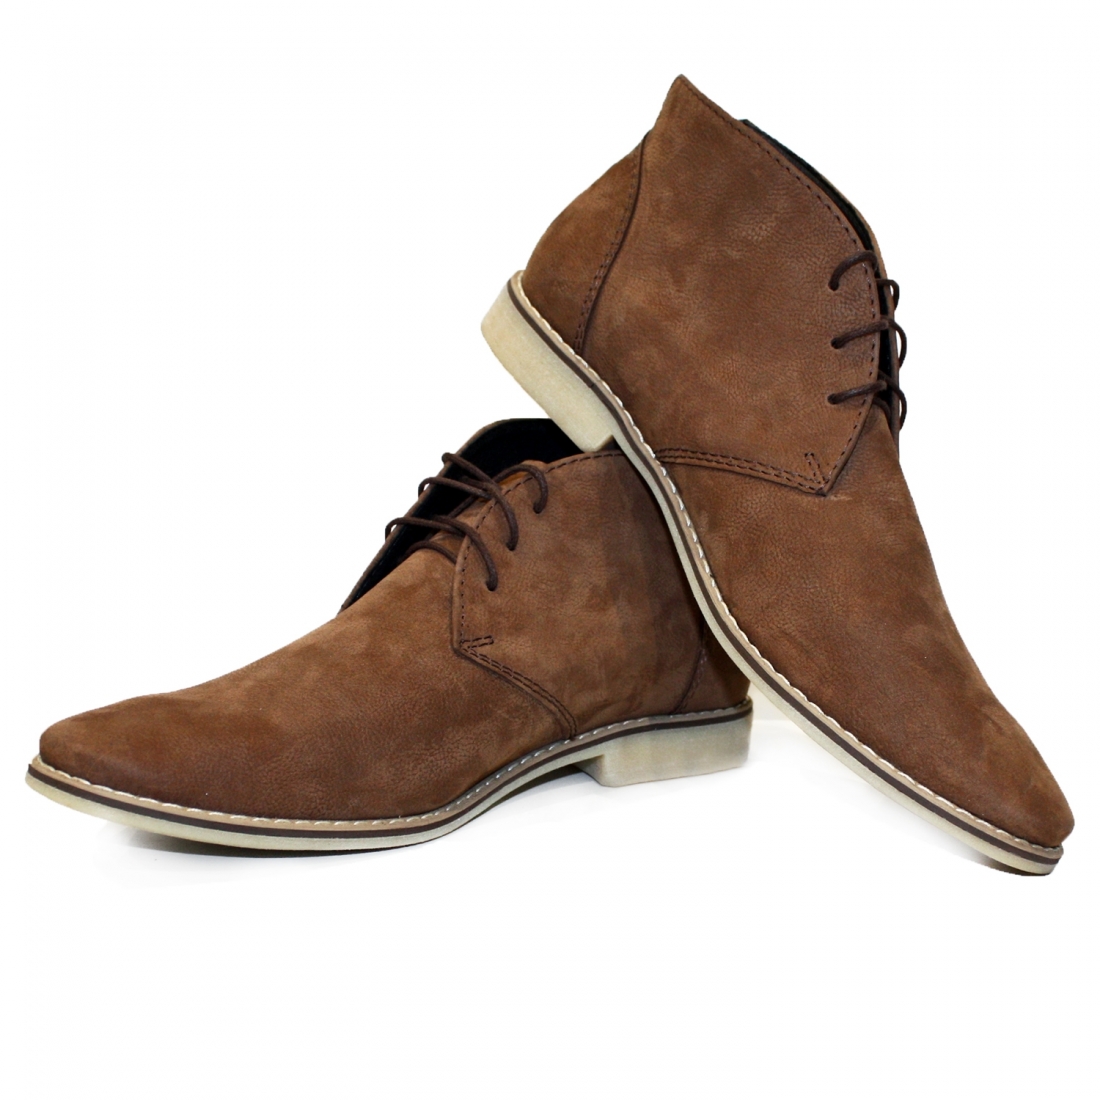 Modello Tarrora - Chukka Boots - Handmade Colorful Italian Leather Shoes